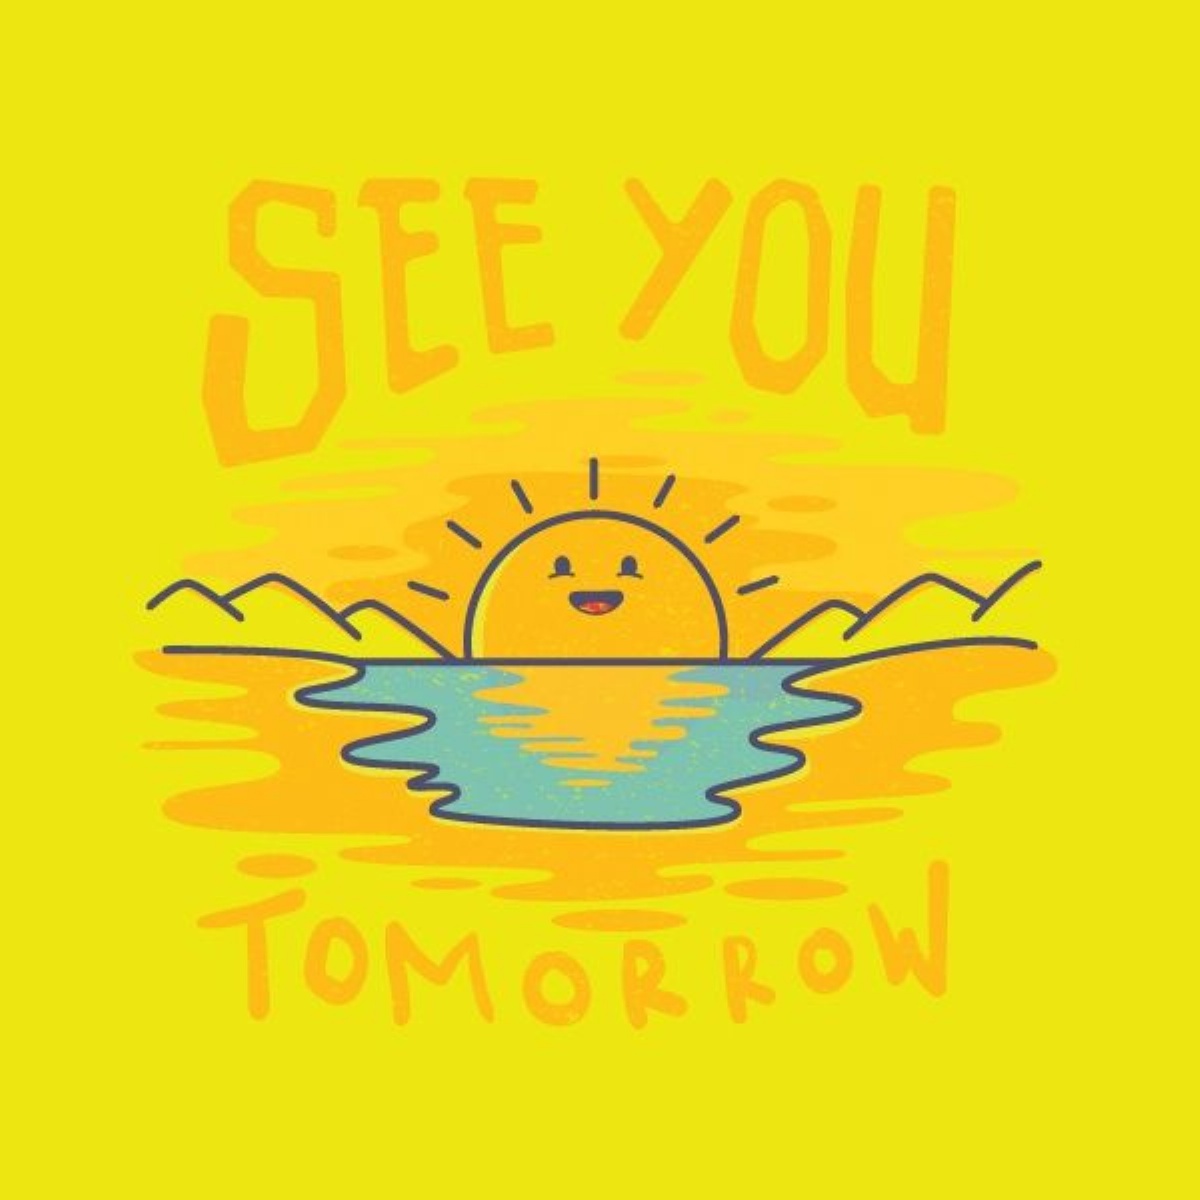 9 Professional Ways to Say “See You Tomorrow” - English Recap